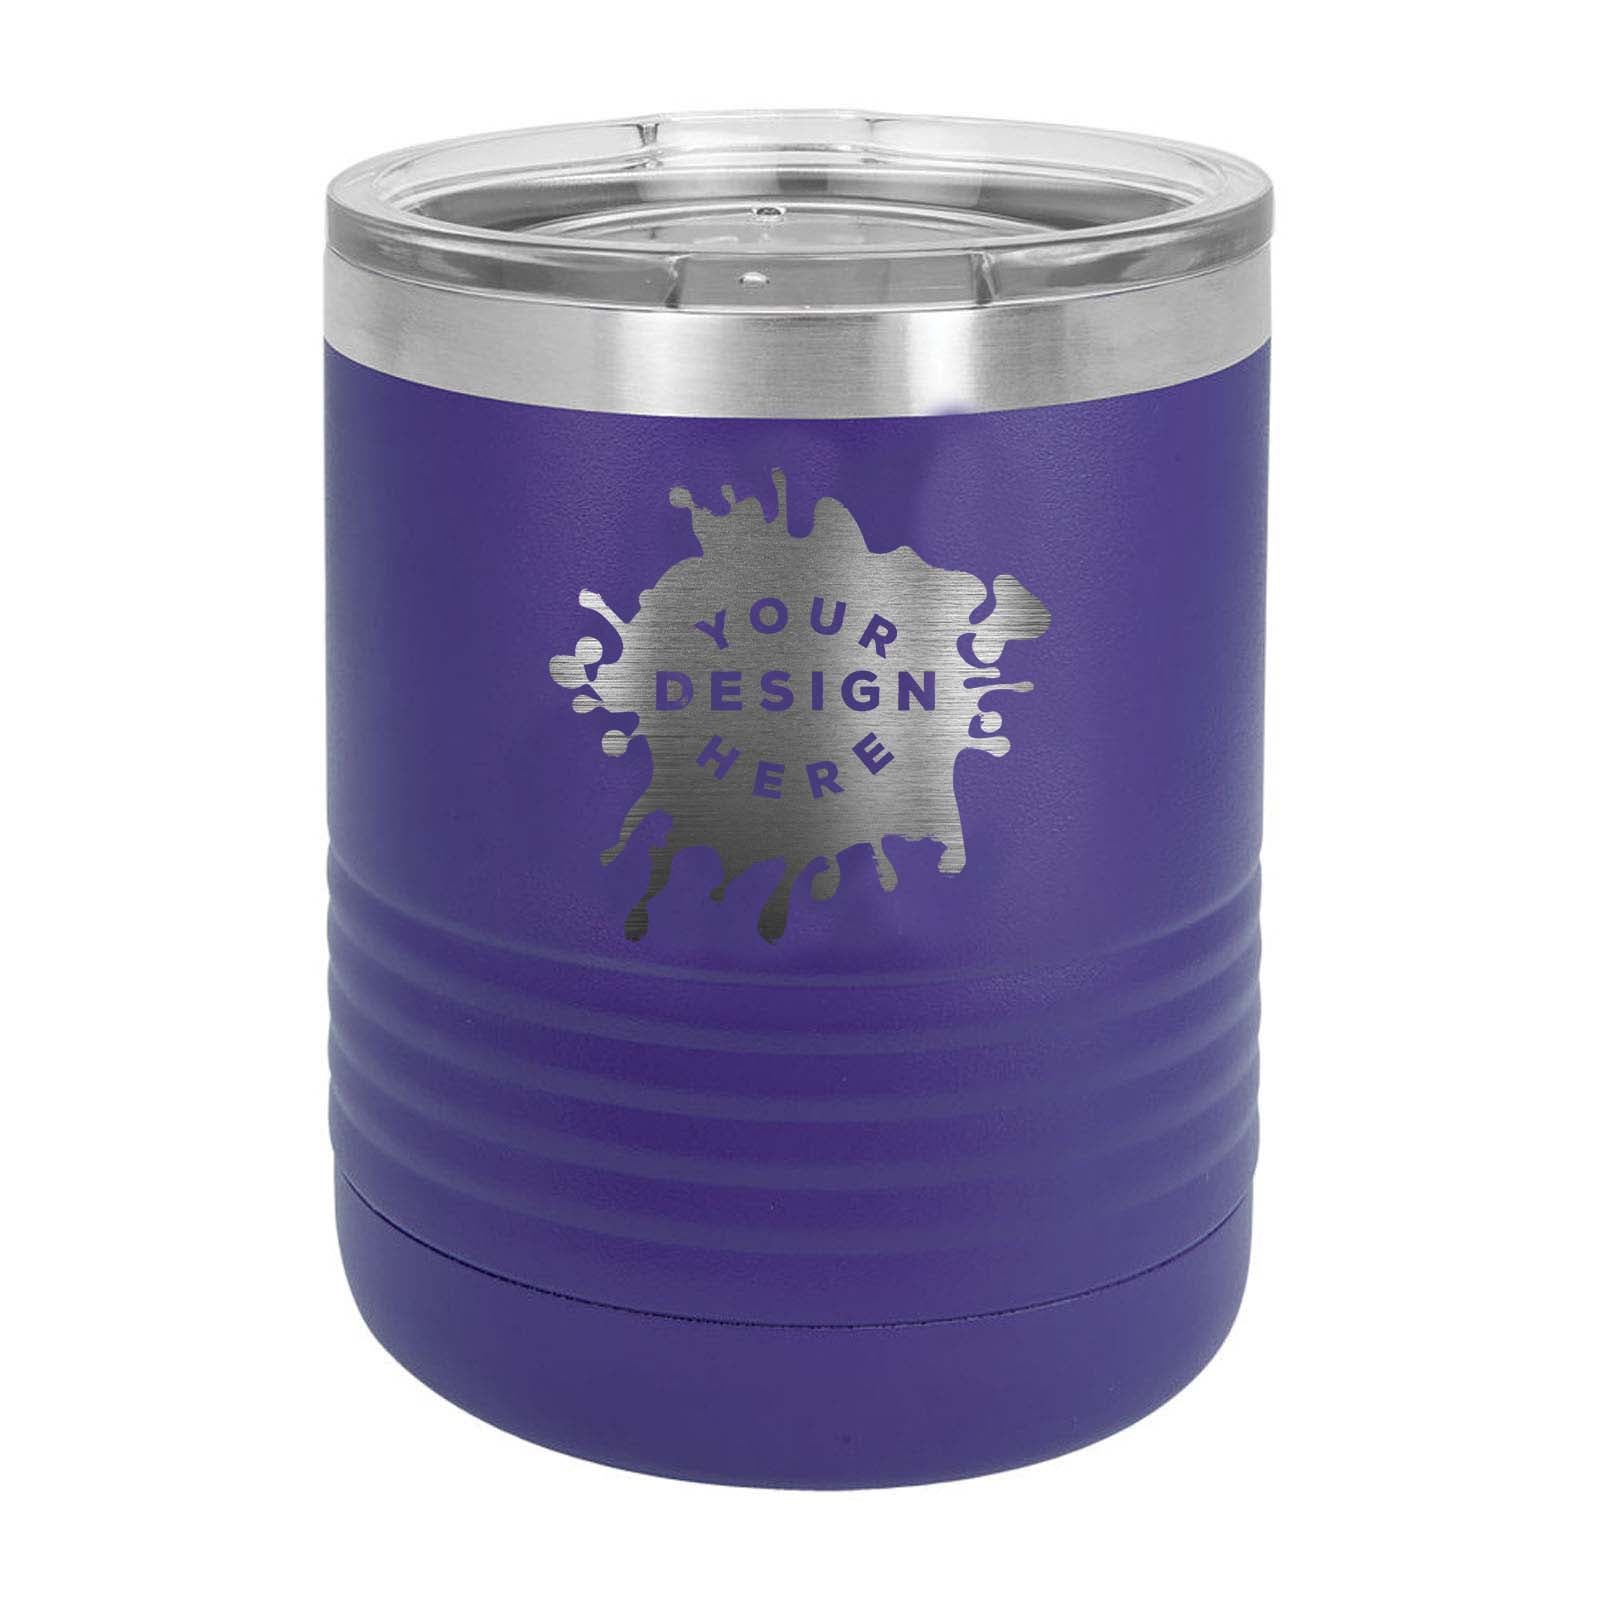 Majestic Purple 20oz travel mug - Superior Coffee logo engraved